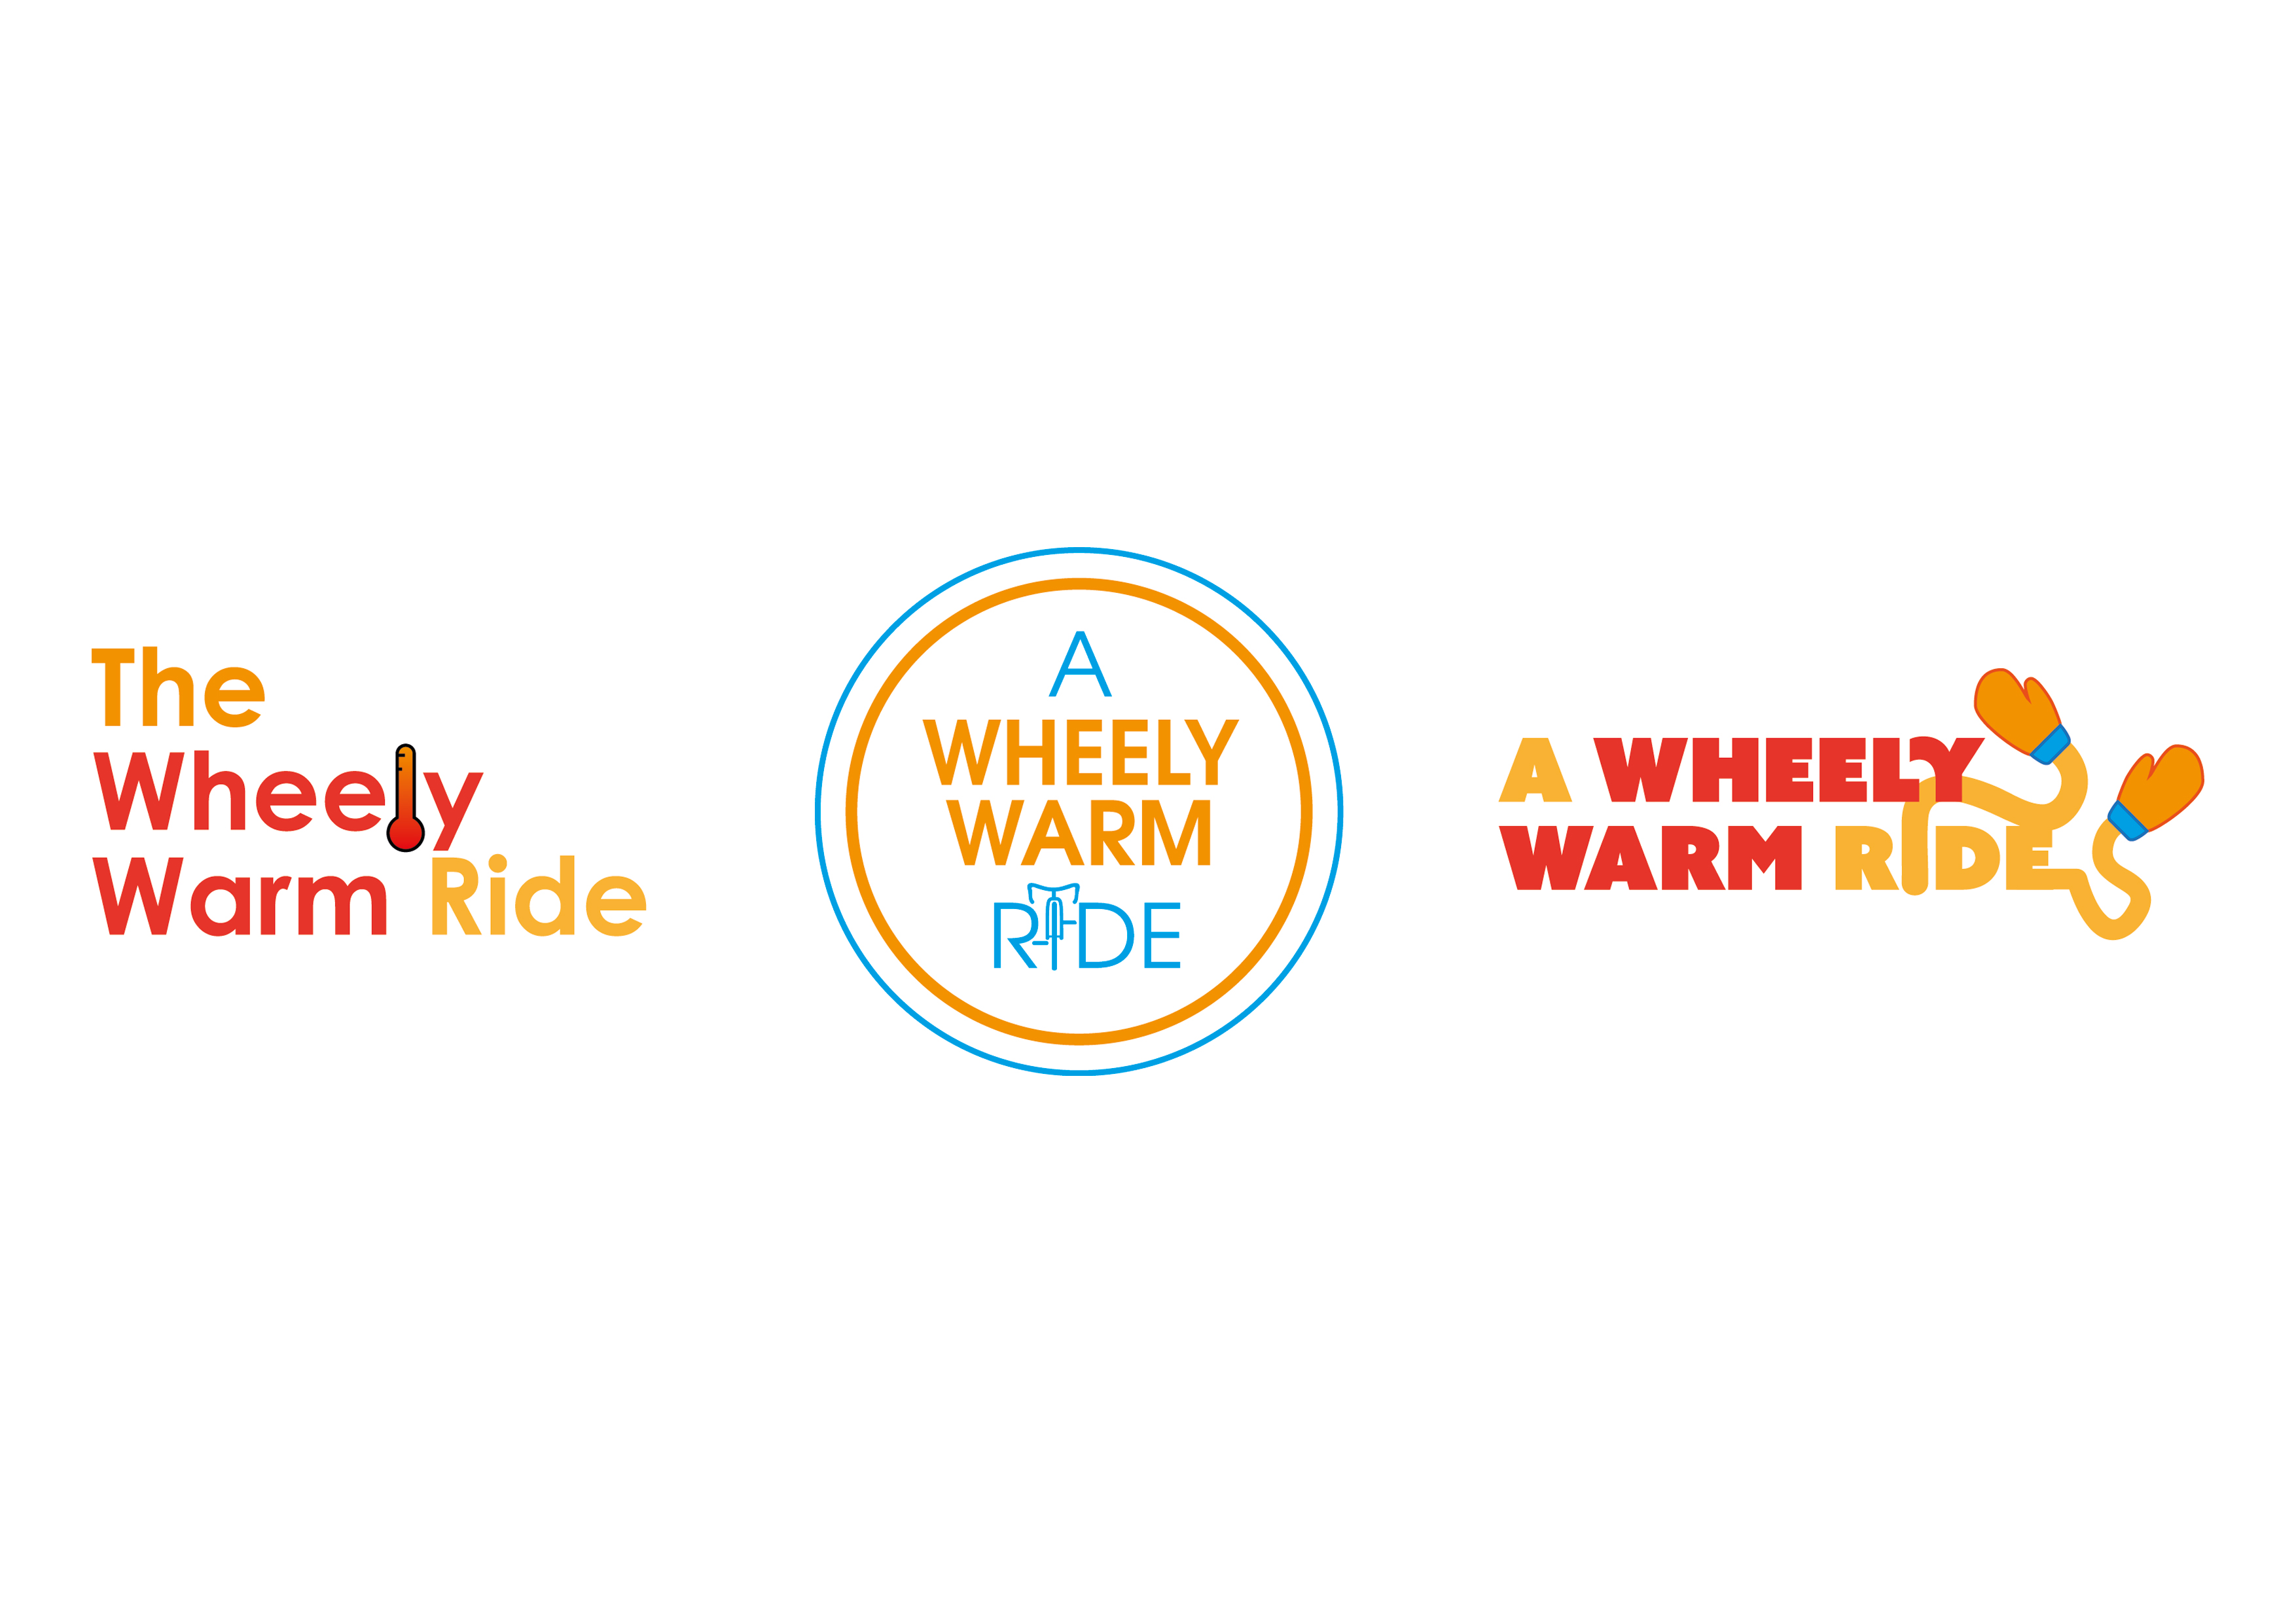 A Wheely Warm Ride logo development two